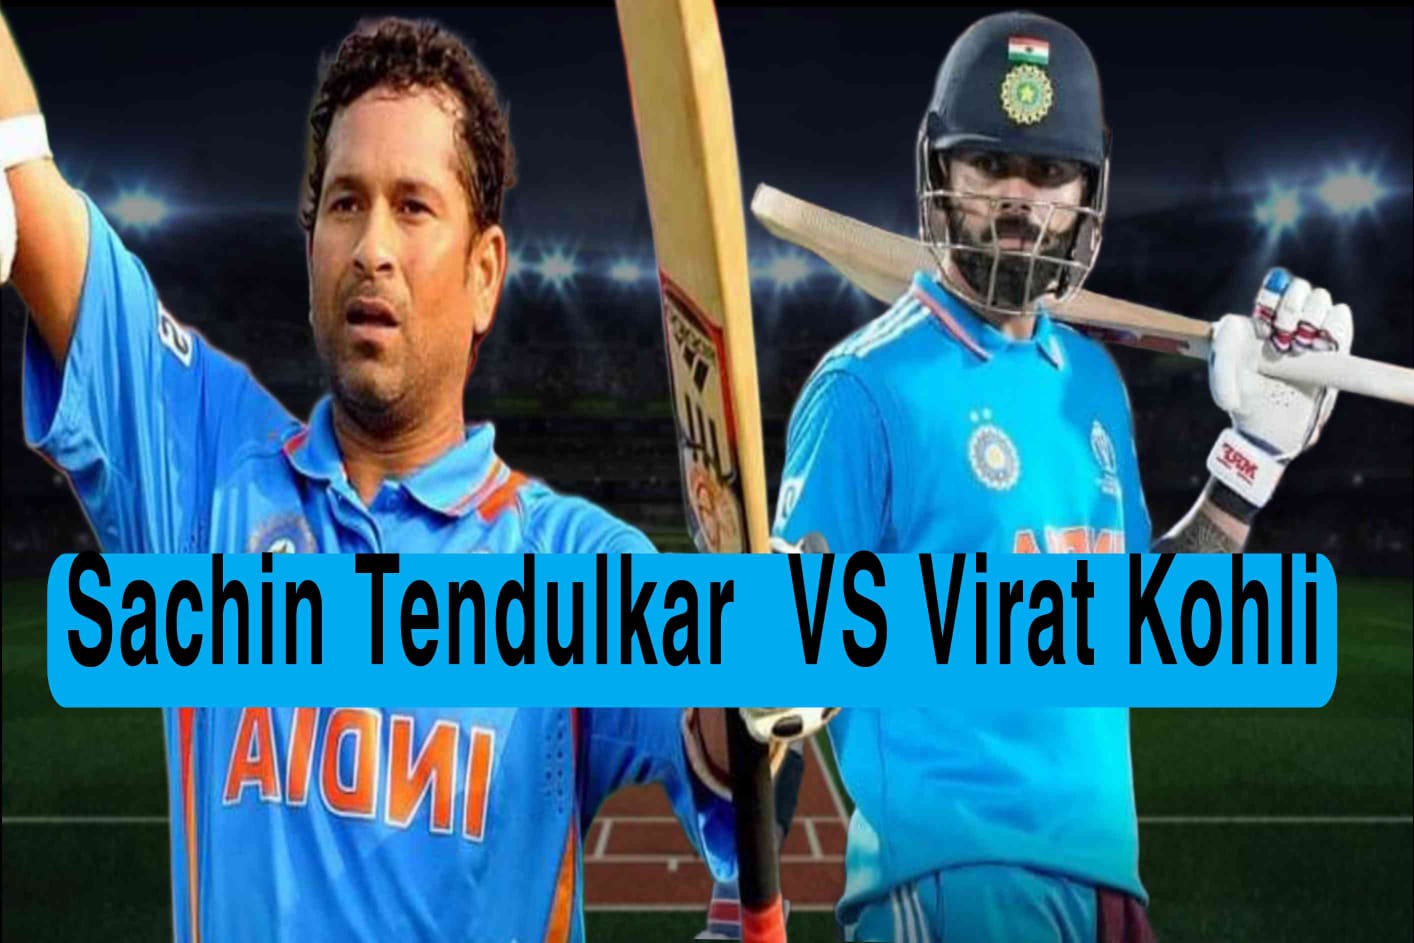 Will Virat Kohli be able to defeat Sachin?